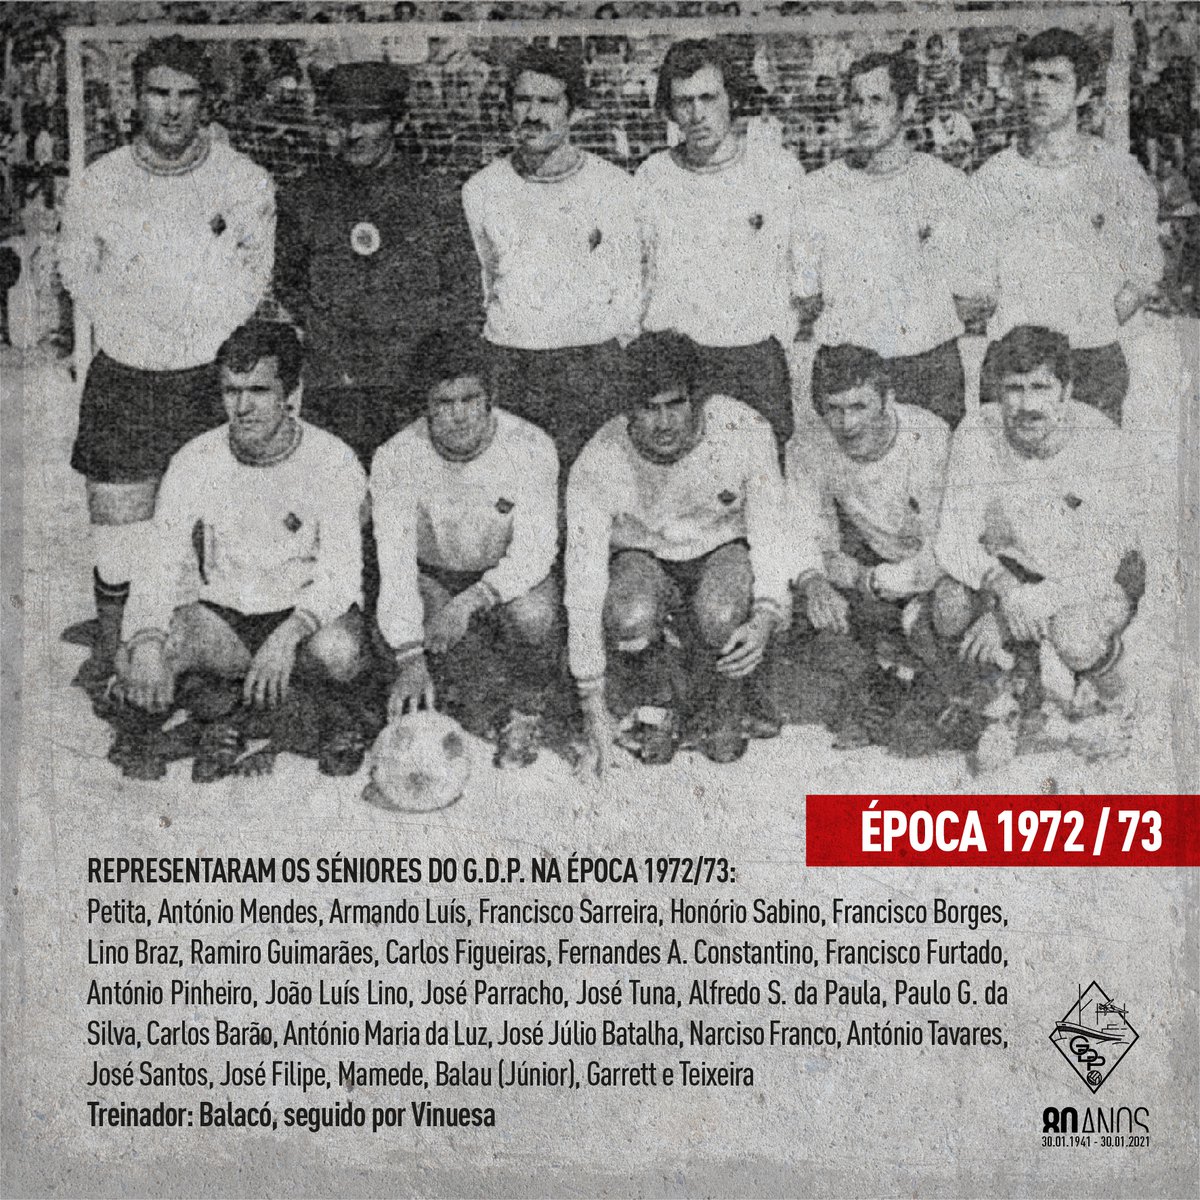 ÉPOCA 1971 -1972